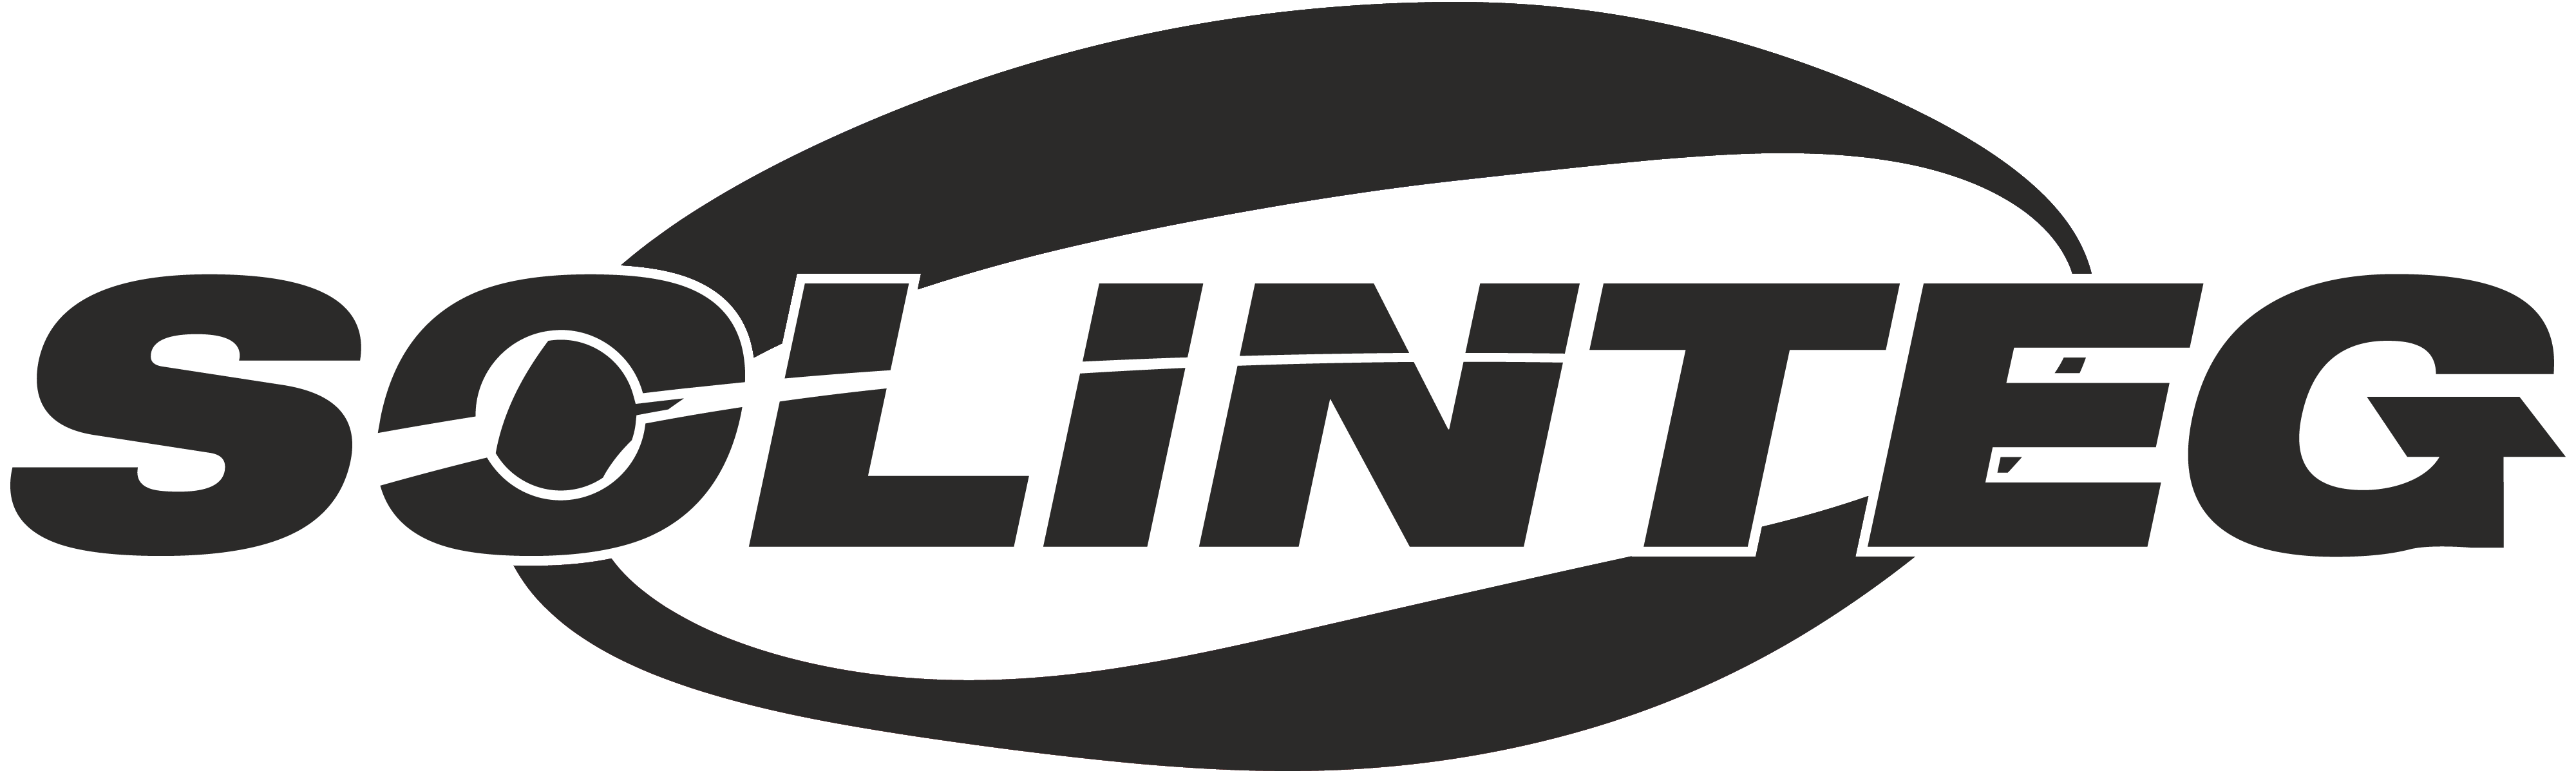 Solinteg - logo Center Black